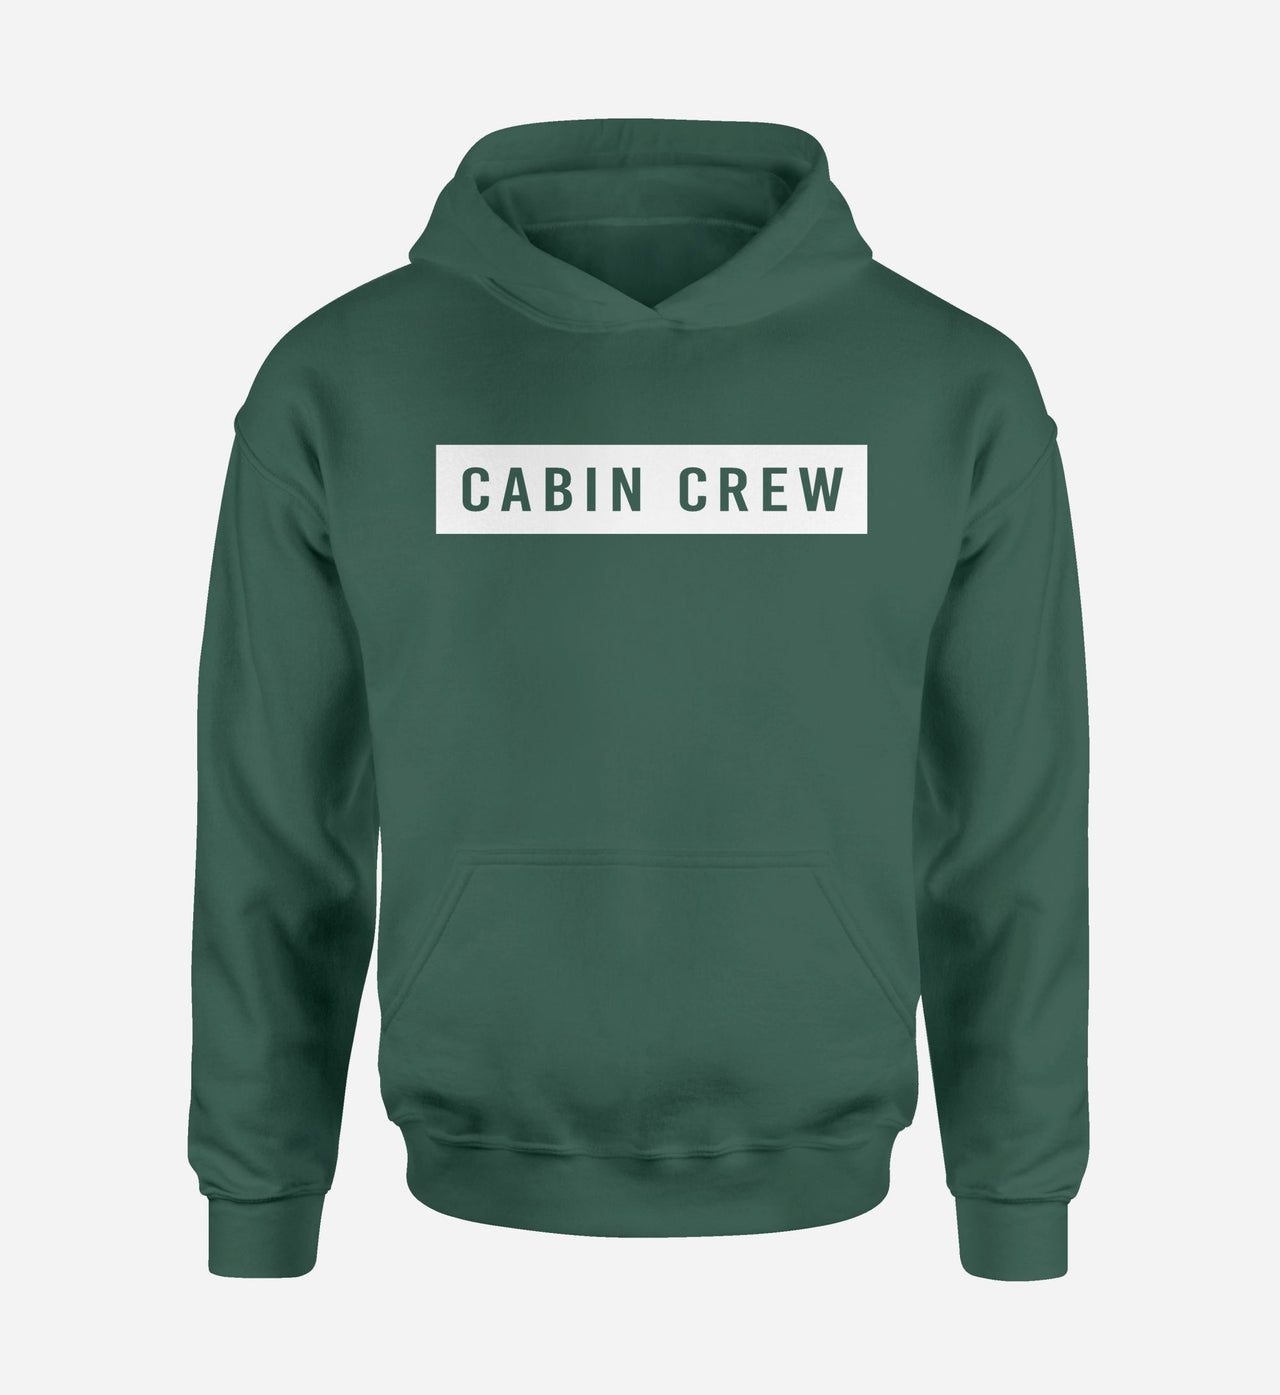 Cabin Crew Text Designed Hoodies